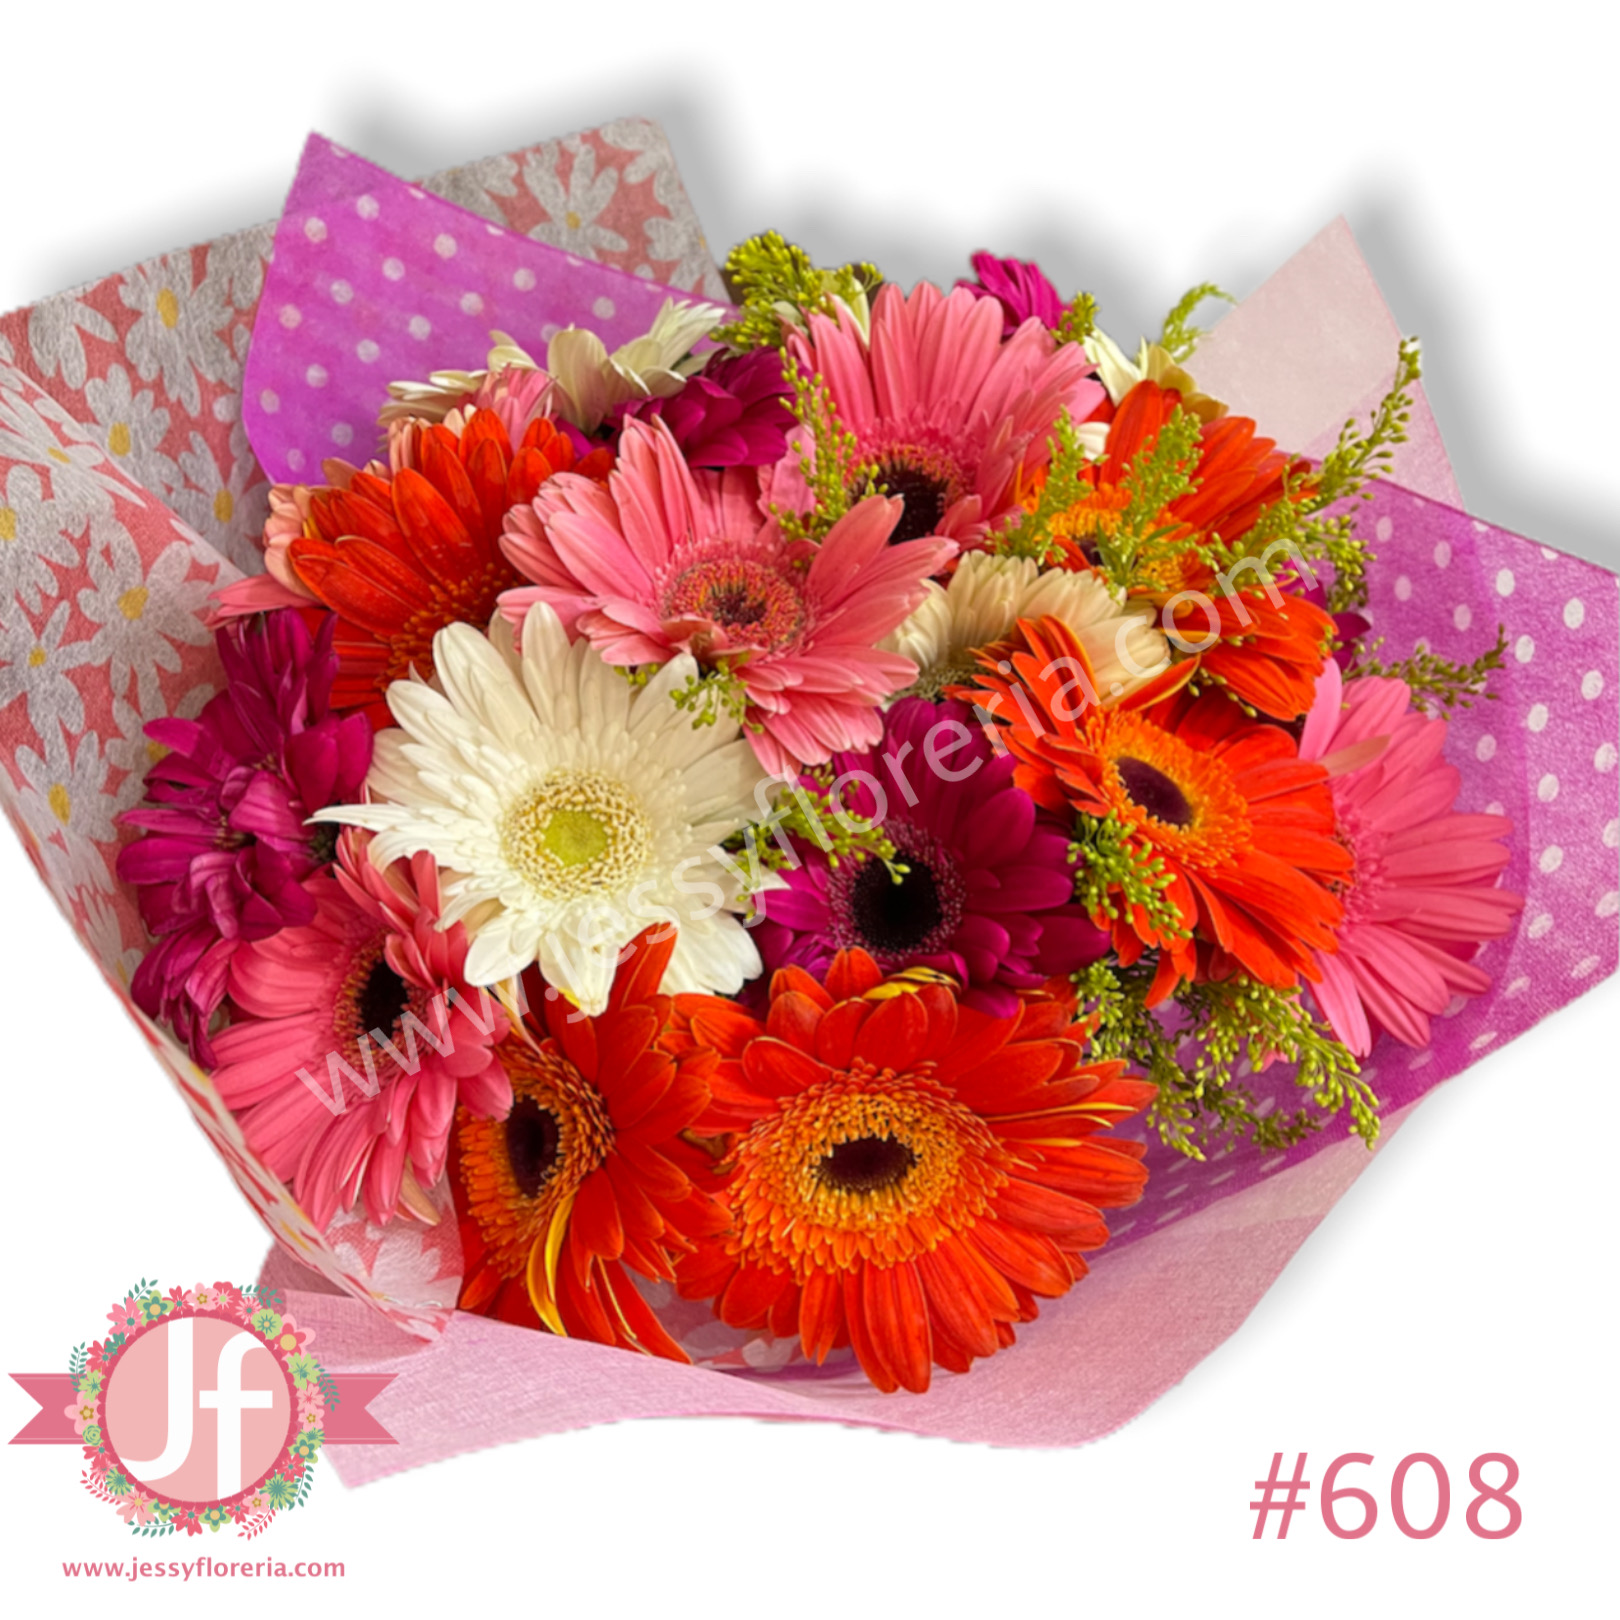 Bouquet de 24 gerberas de colores - Envíos GRATIS Mismo día 2 a 4 Hrs